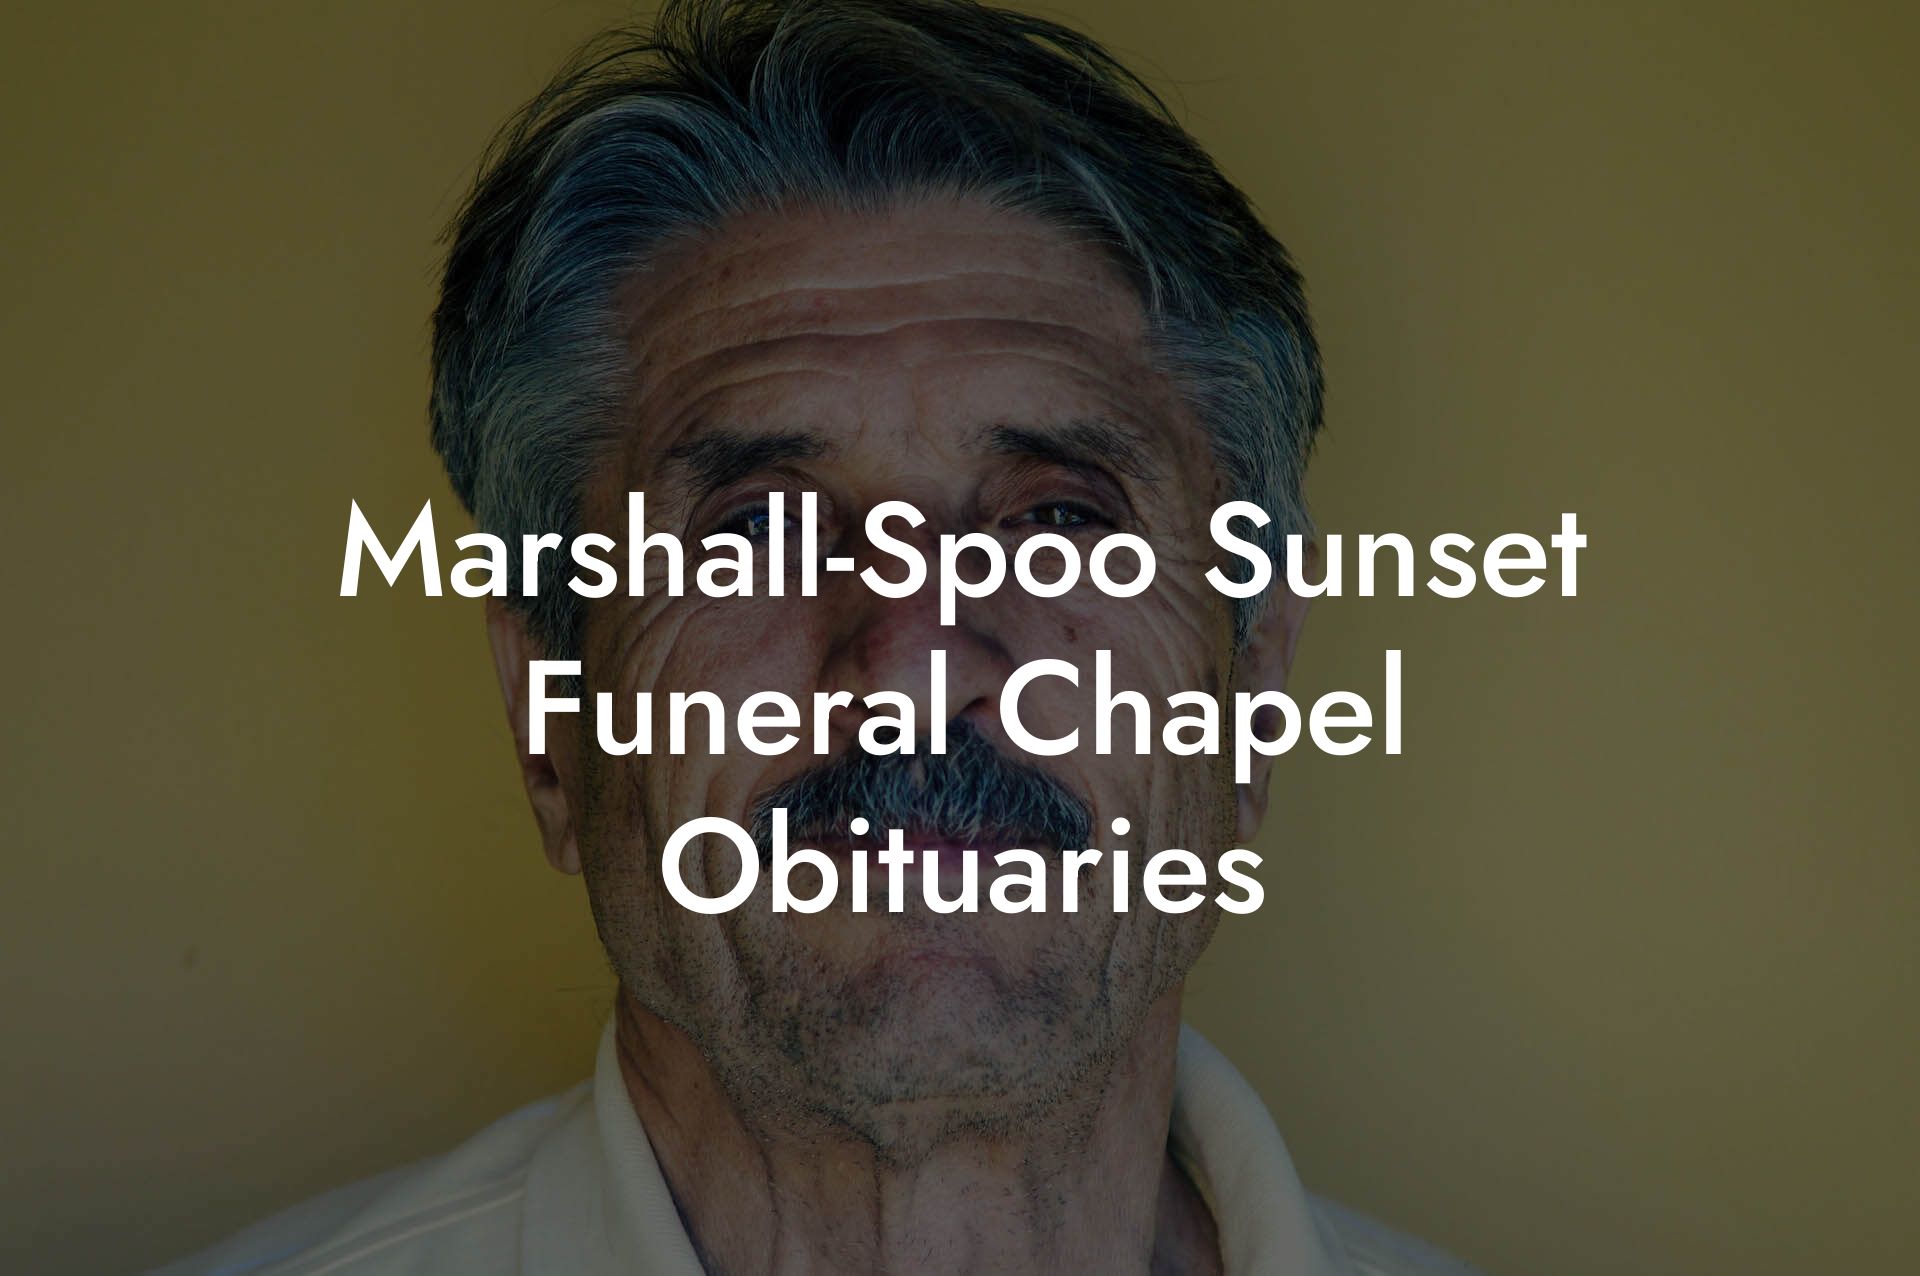 Marshall-Spoo Sunset Funeral Chapel Obituaries